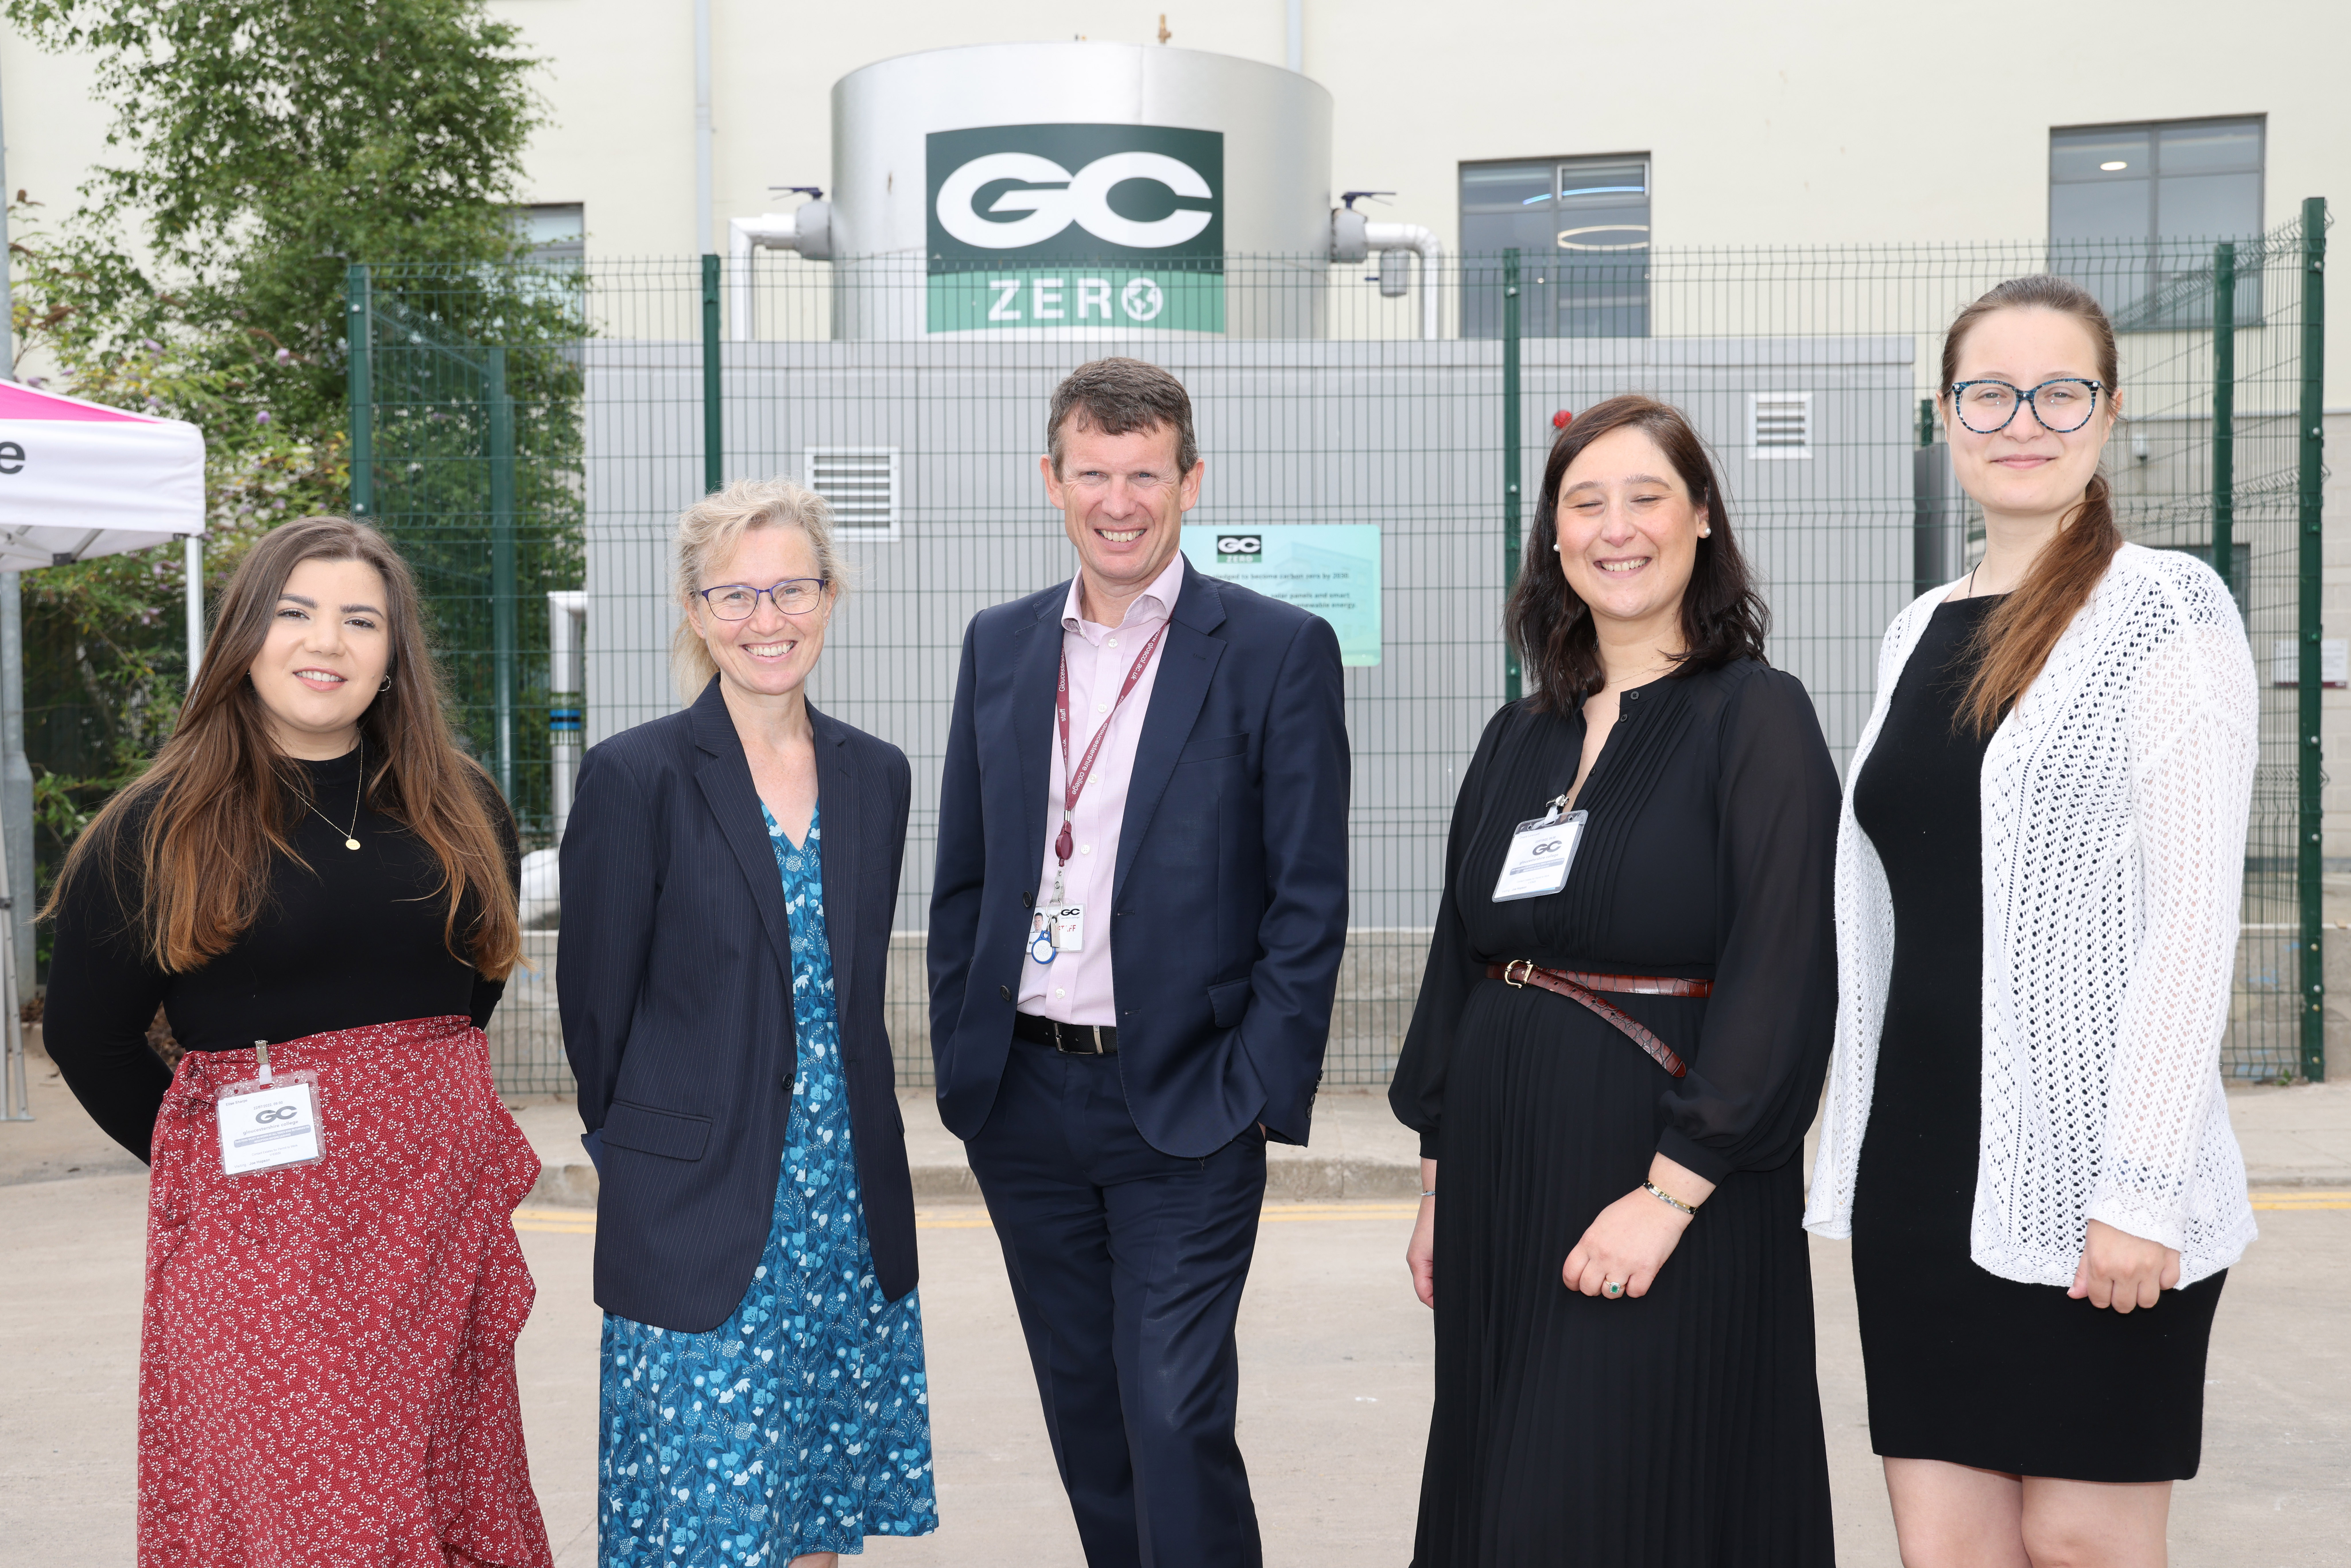 Gloucestershire College celebrates completion of GC Zero works